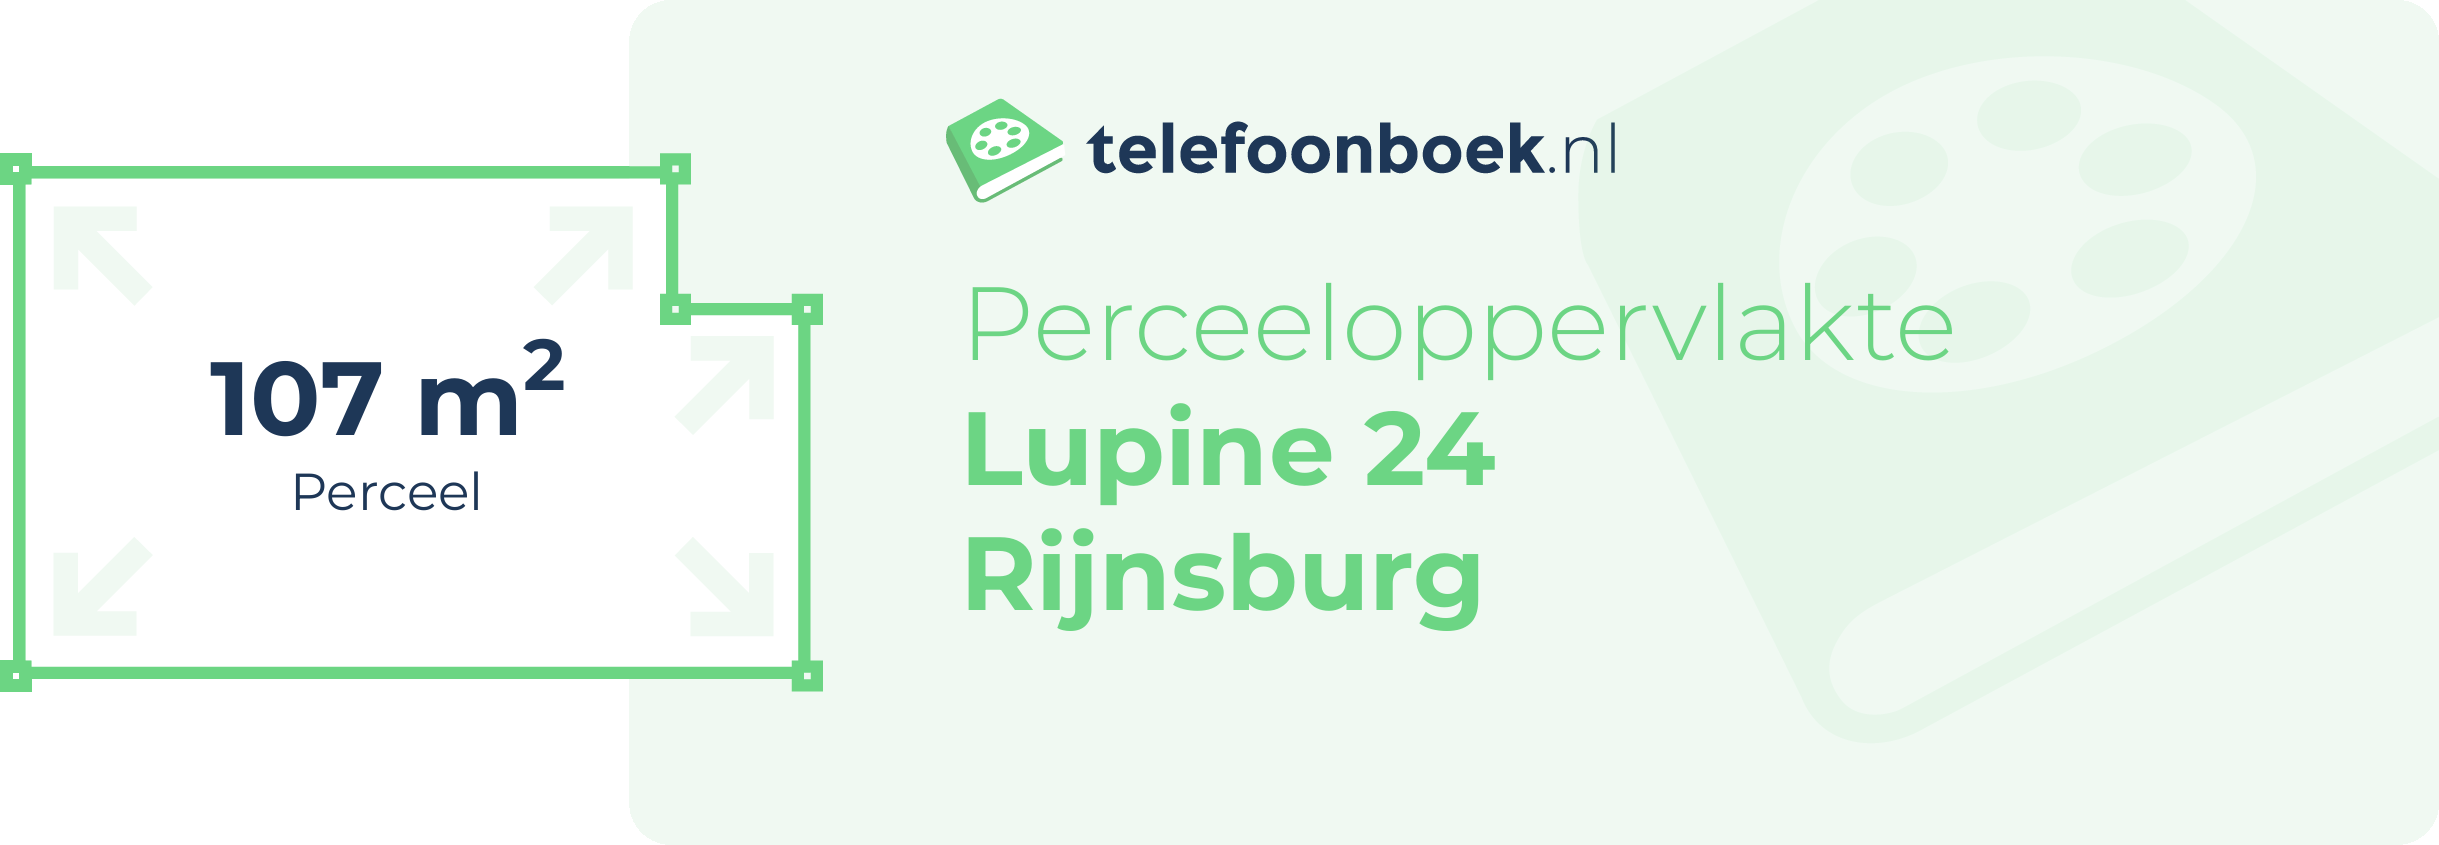 Perceeloppervlakte Lupine 24 Rijnsburg